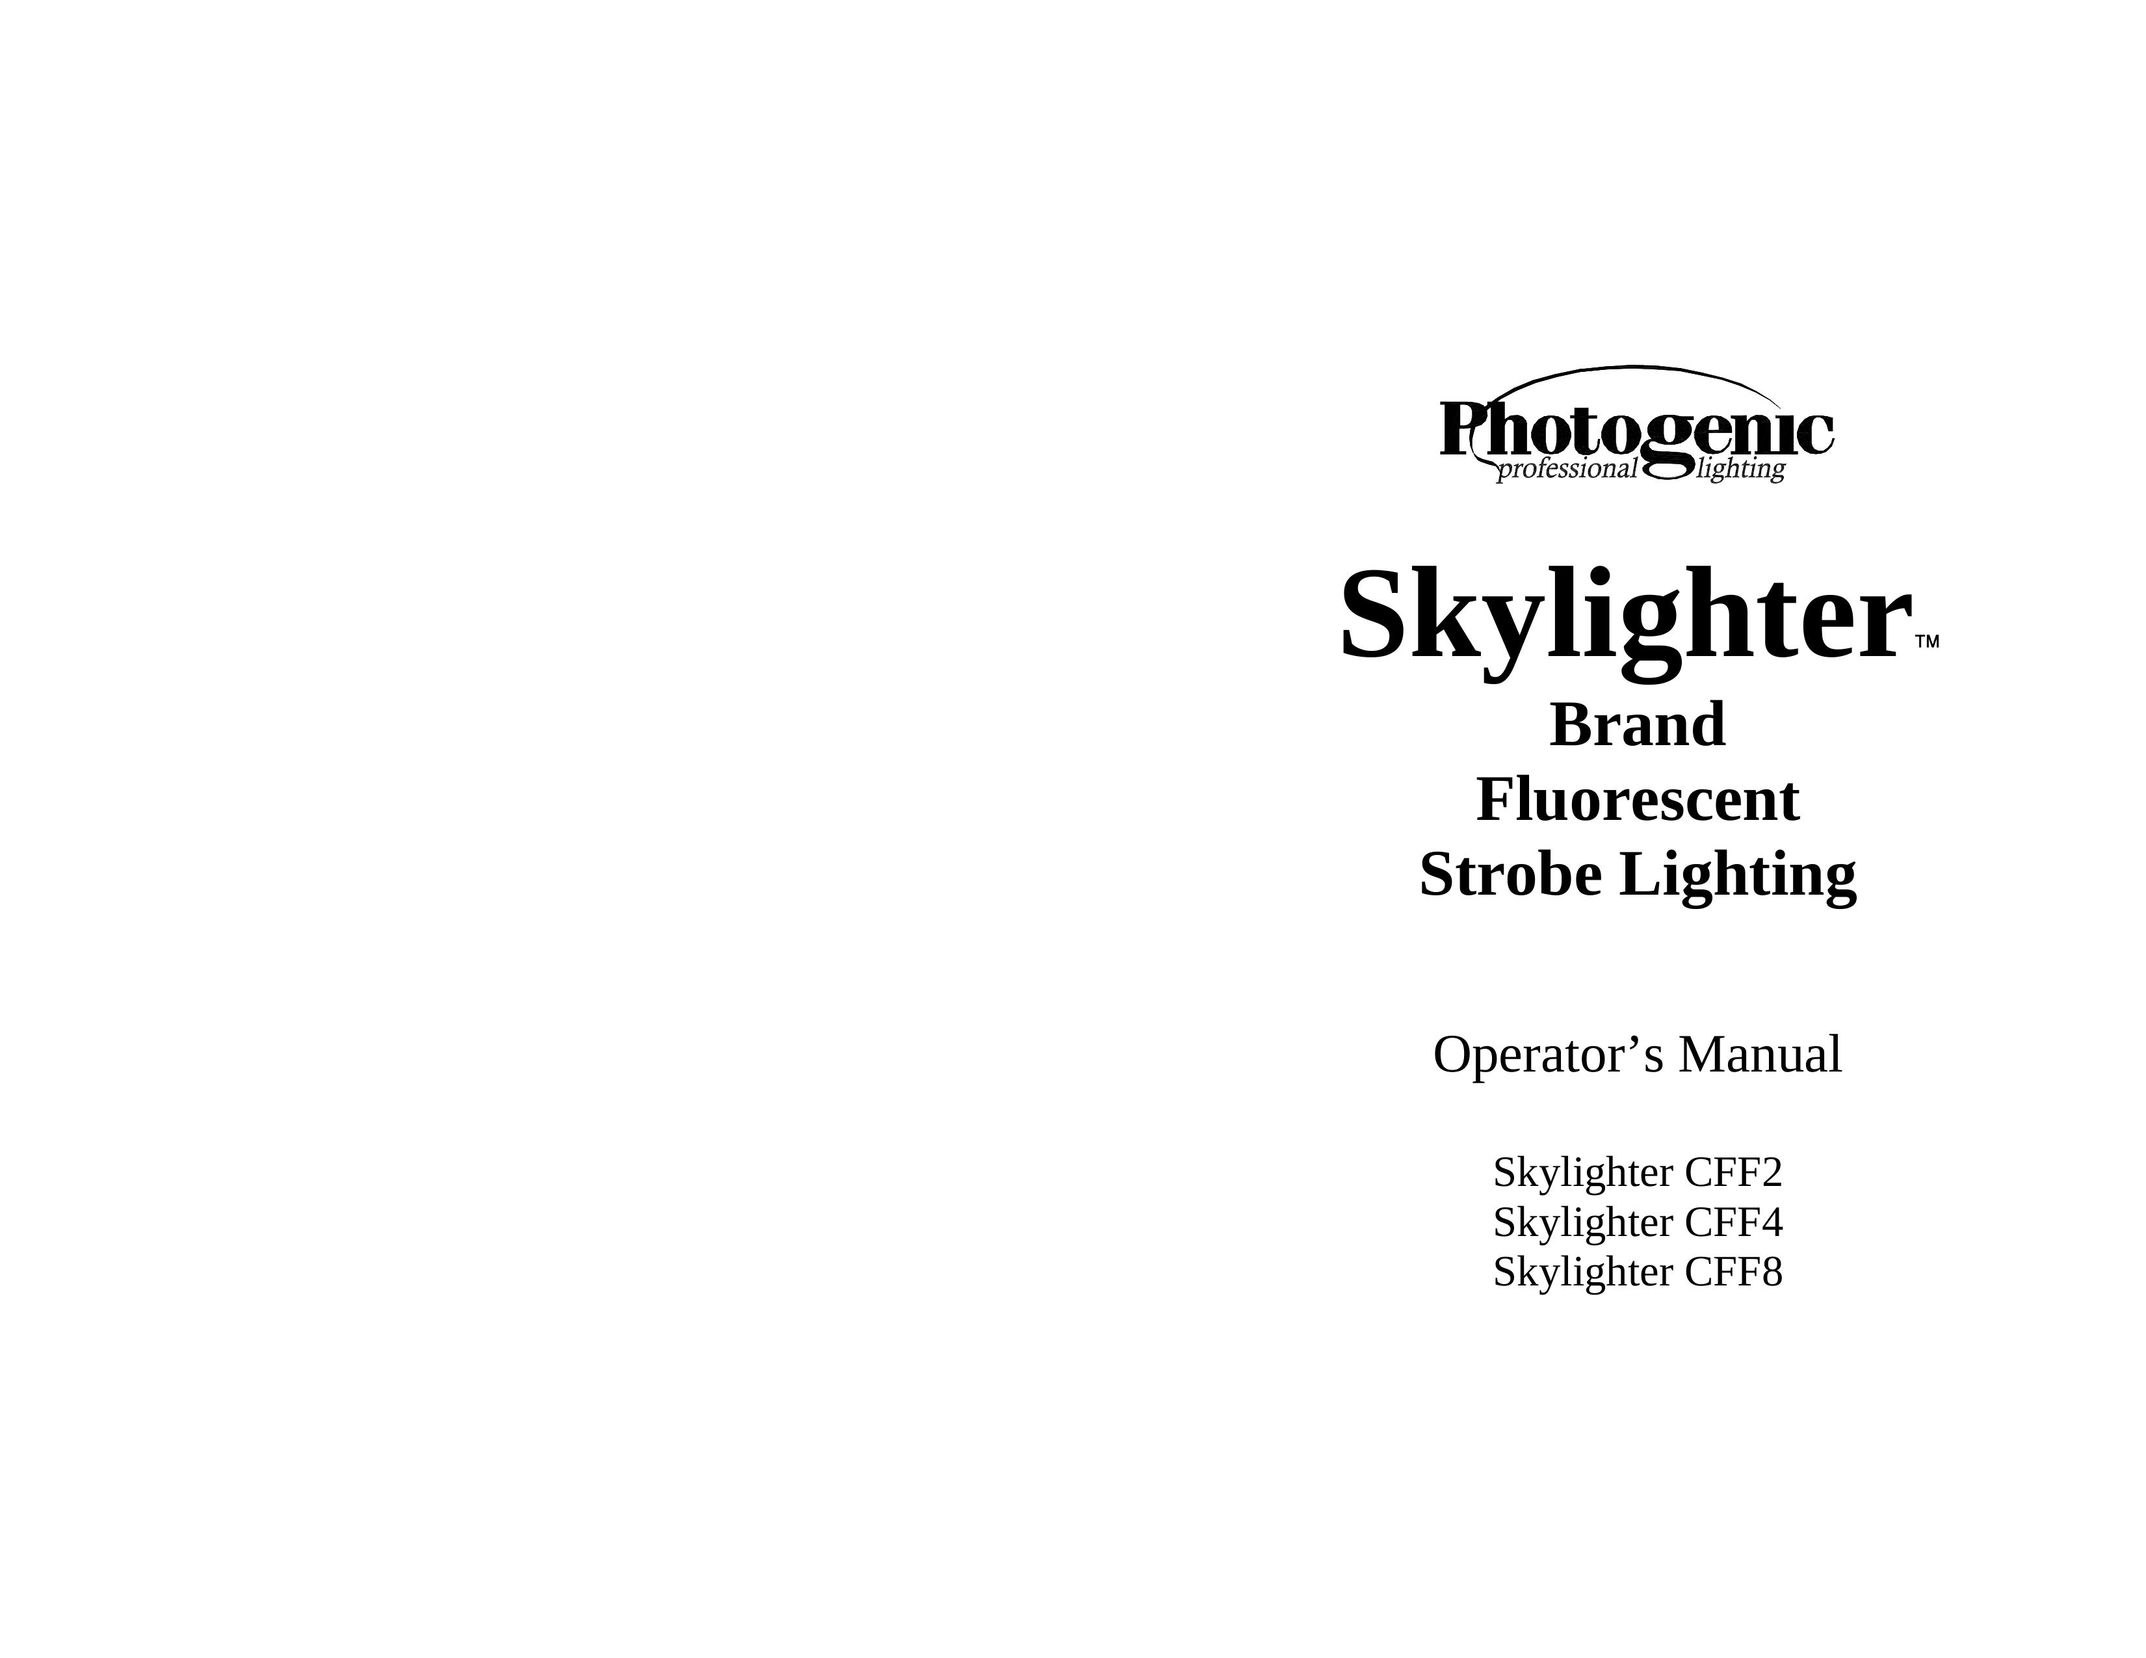 Photogenic Professional Lighting CFF4 Power Supply User Manual